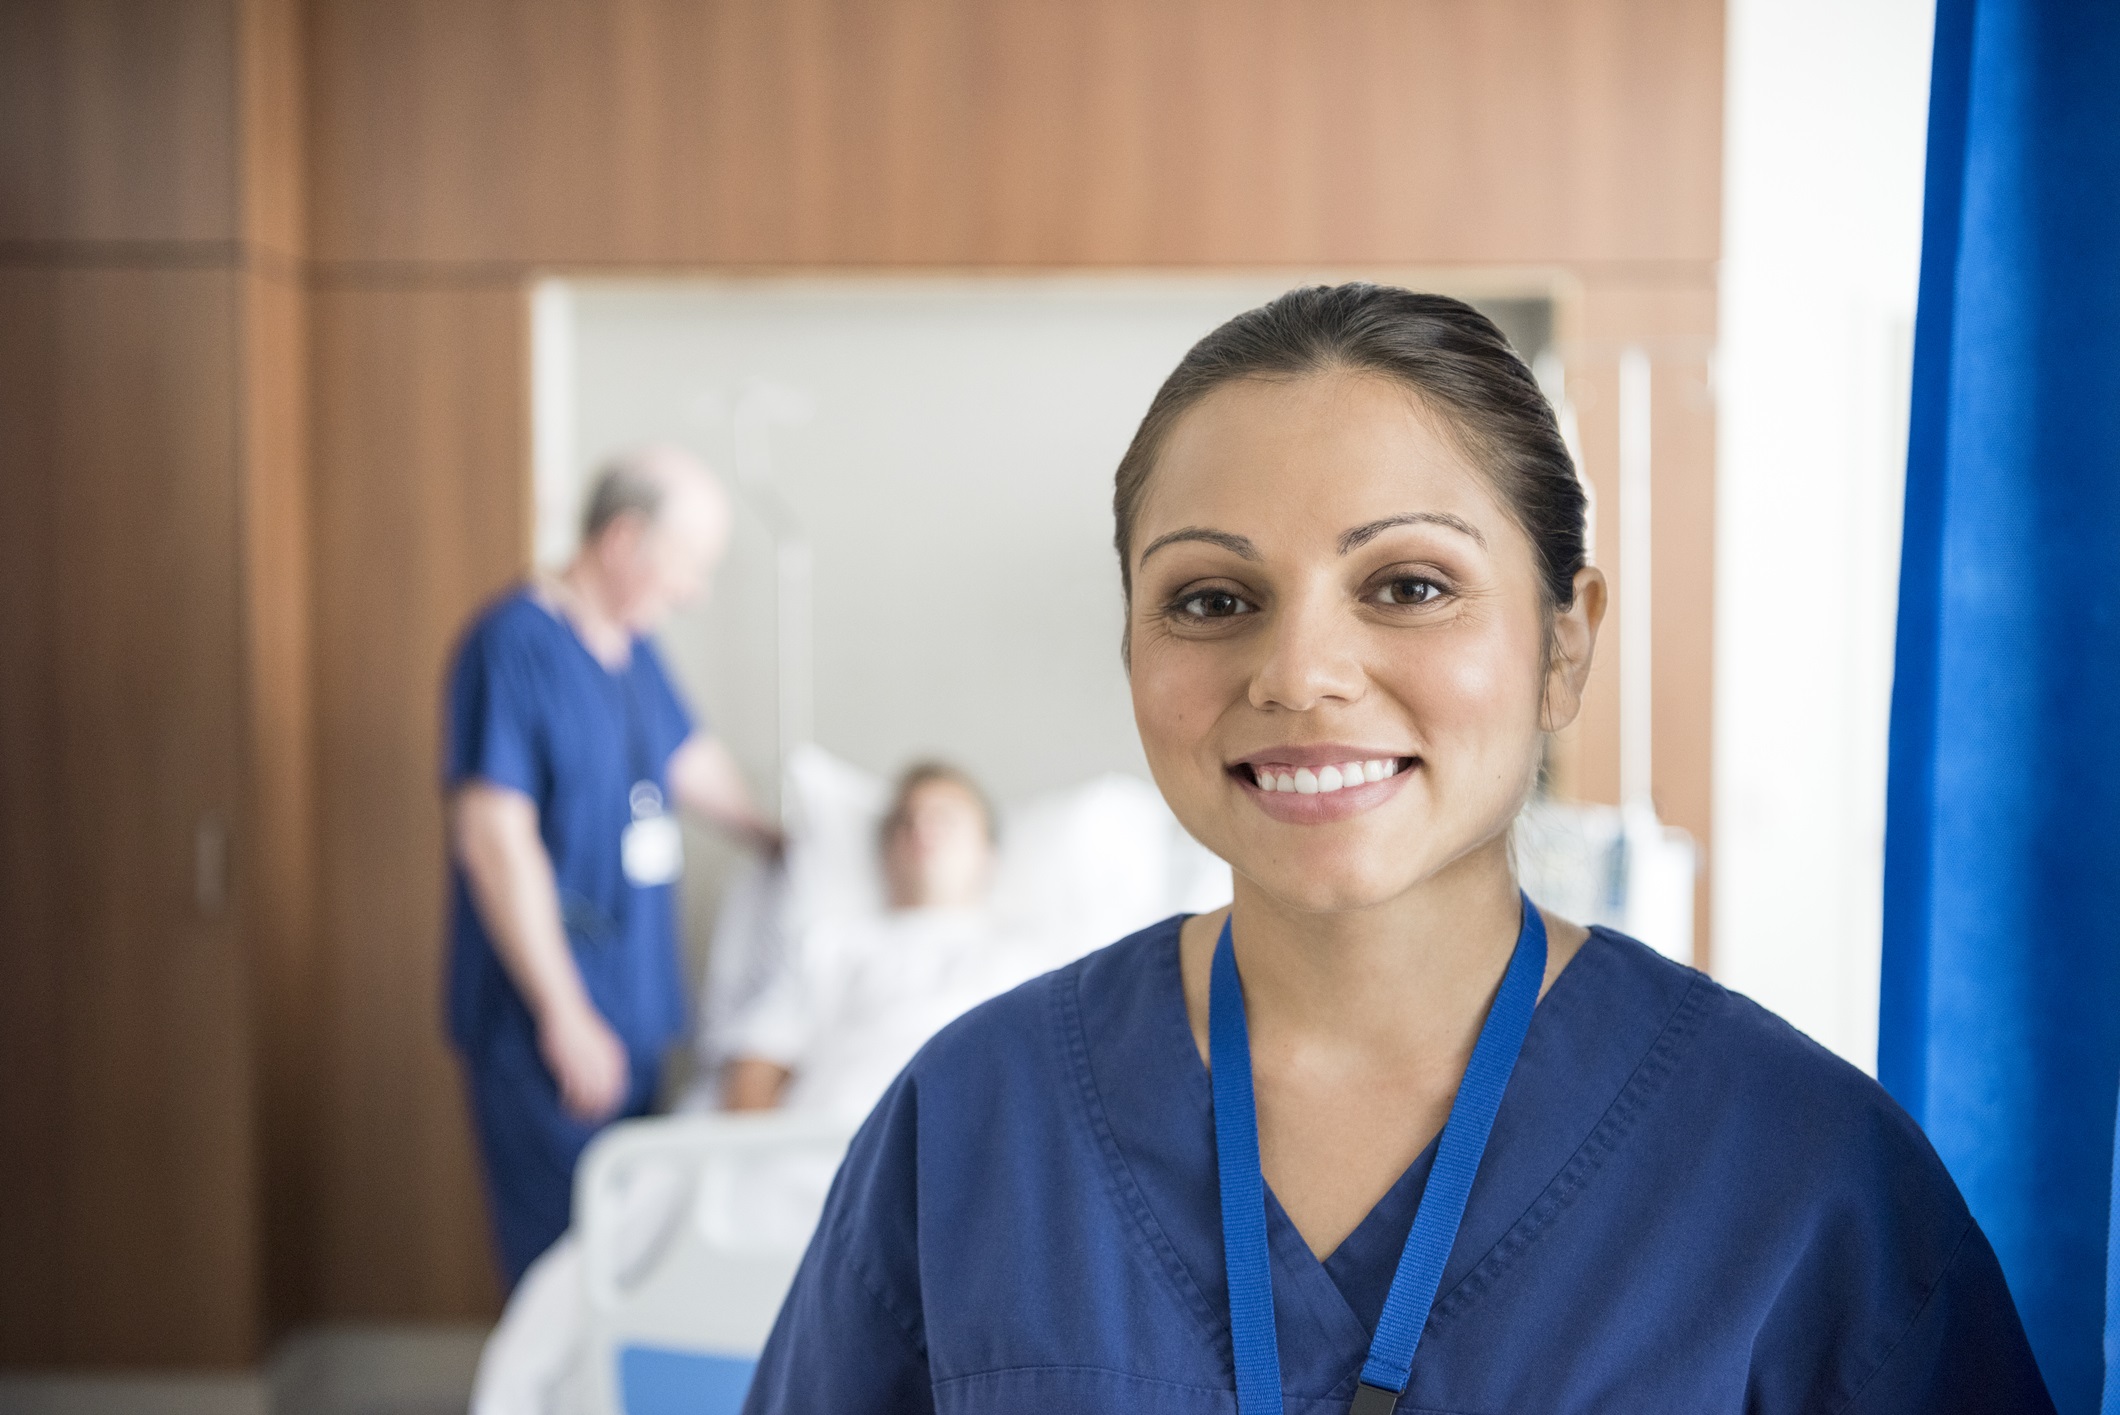 Female Aboriginal health care worker in blue uniform, smiling